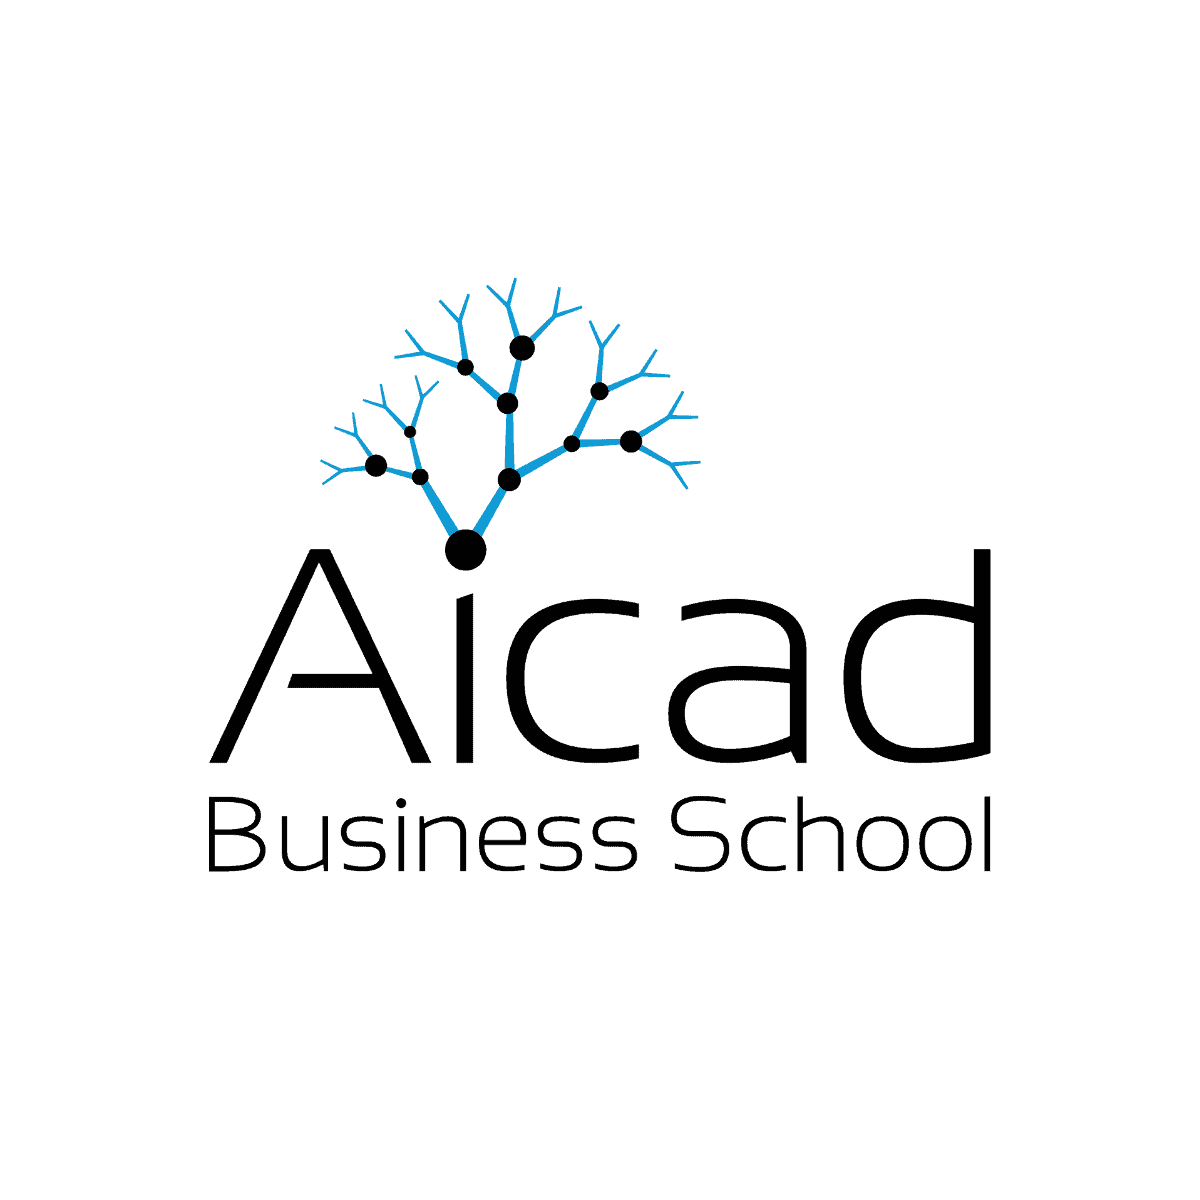 AICAD Business School | Aliado EU TECHO ORG